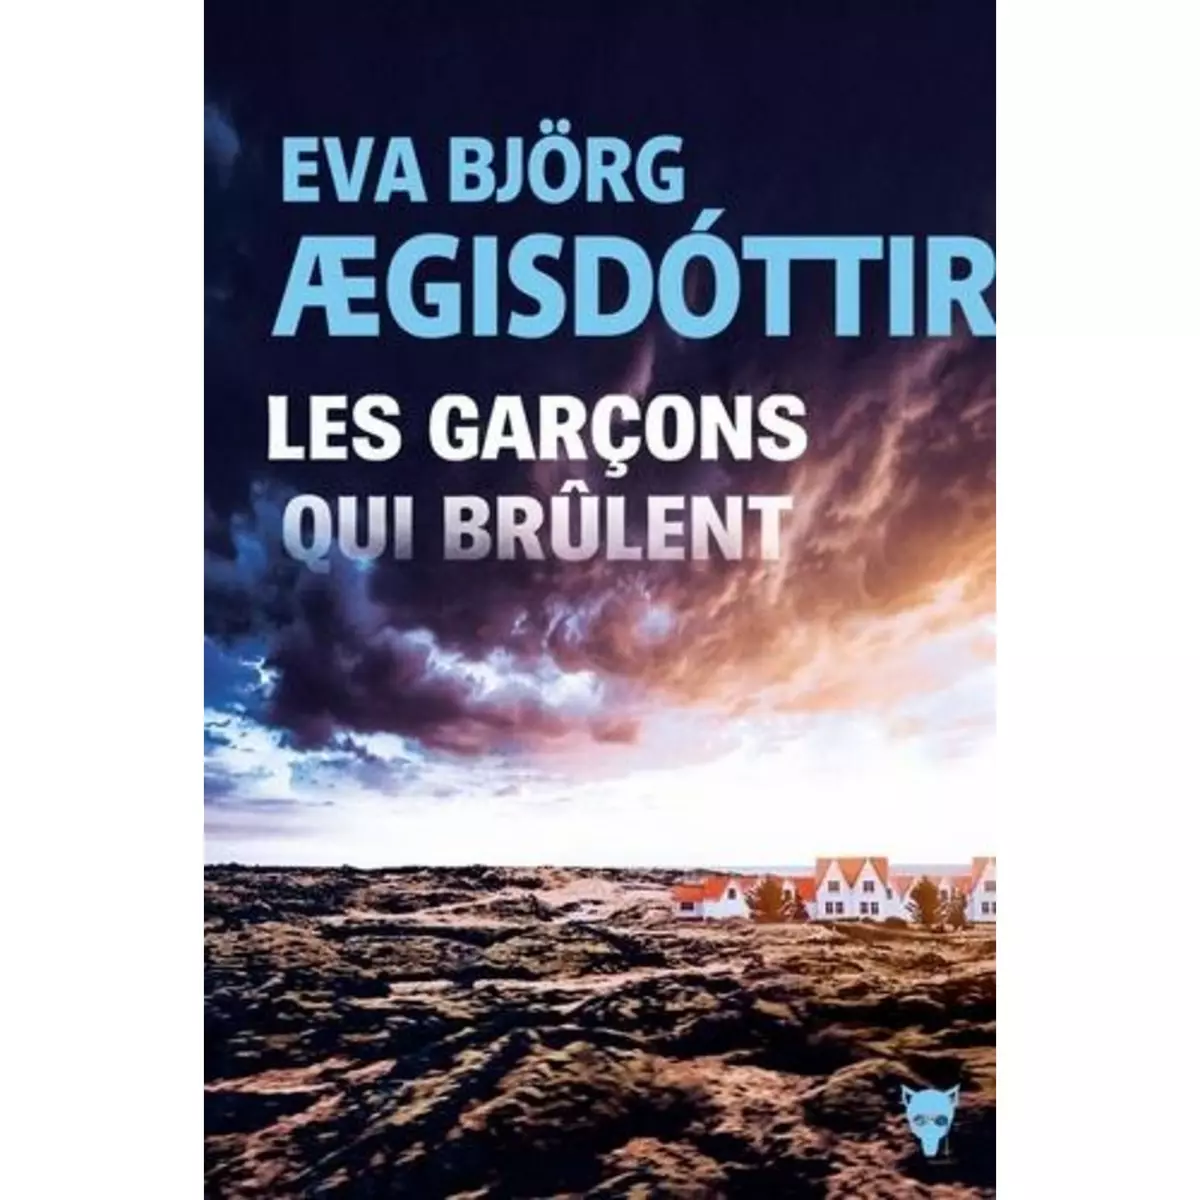  LES GARCONS QUI BRULENT, Aegisdottir Eva Björg